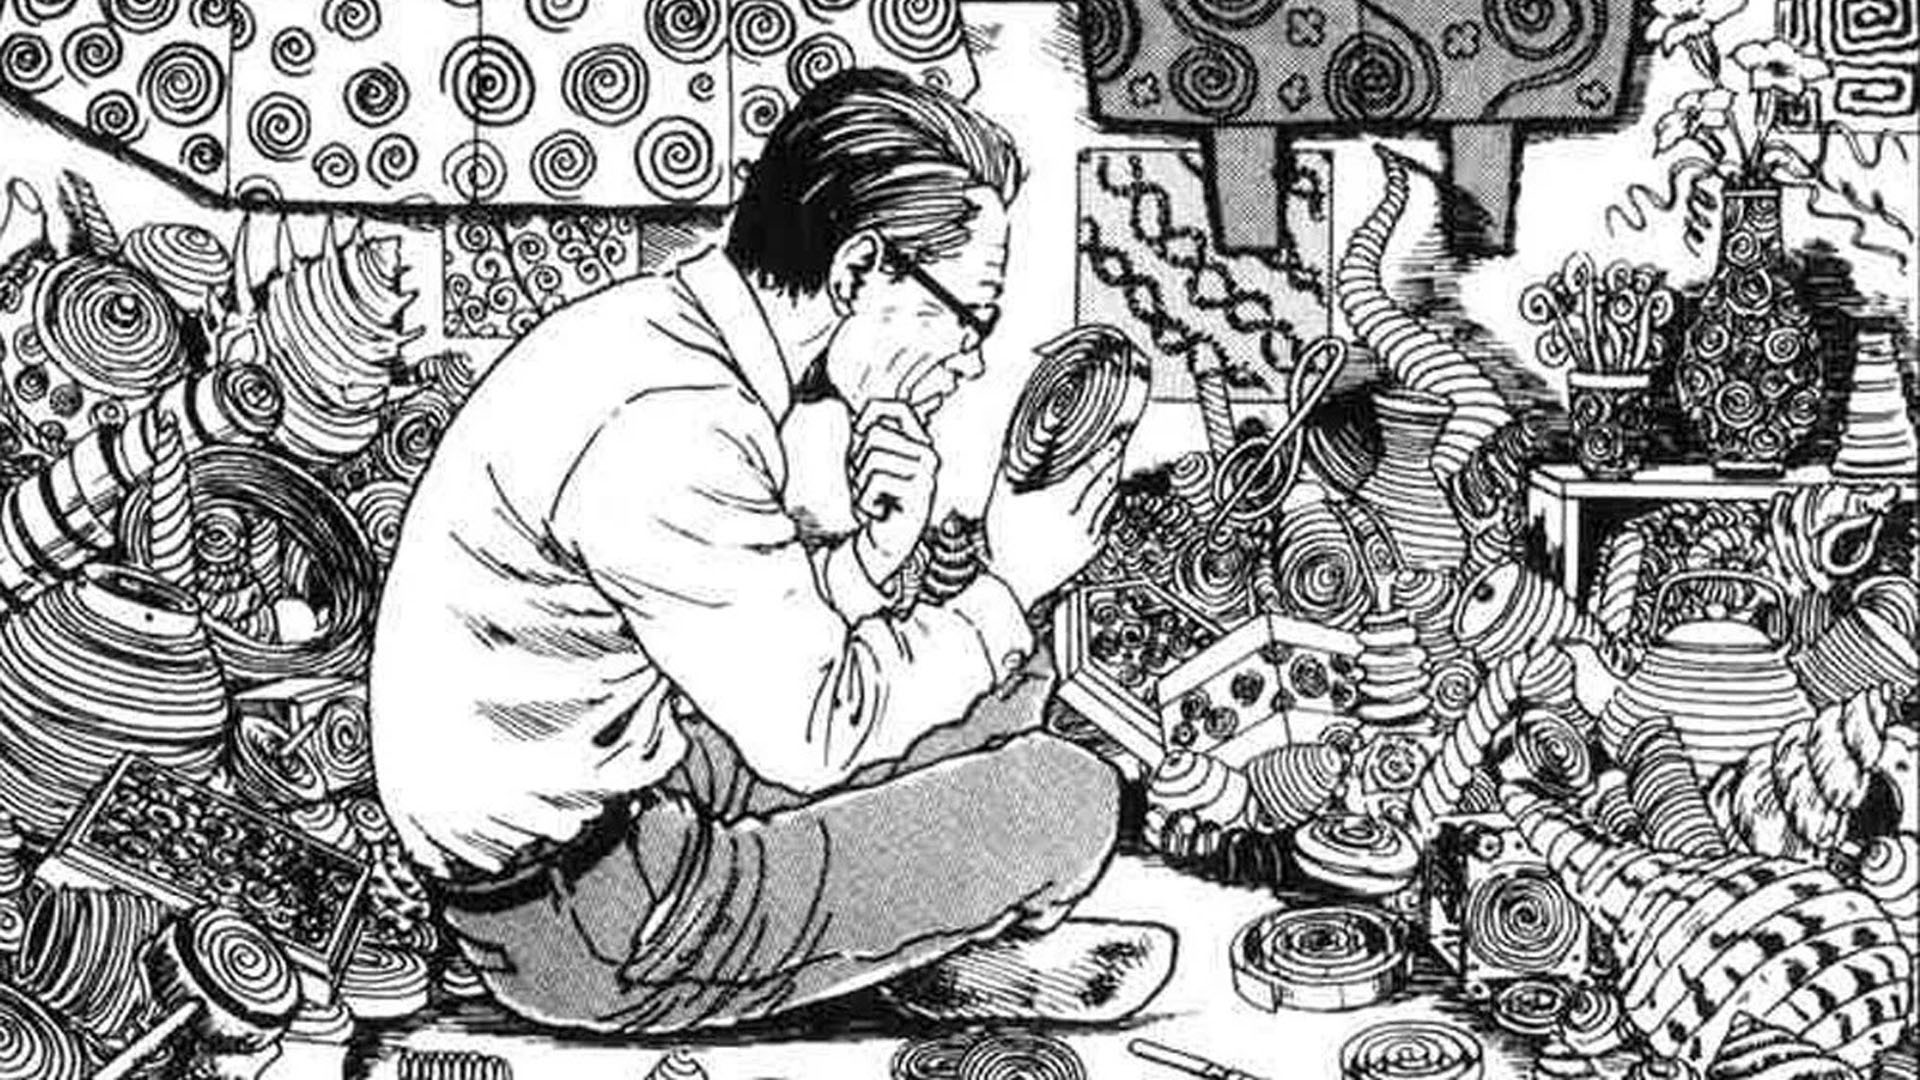 No Longer Human: 10 Things You Didn't Know About The Junji Ito Manga